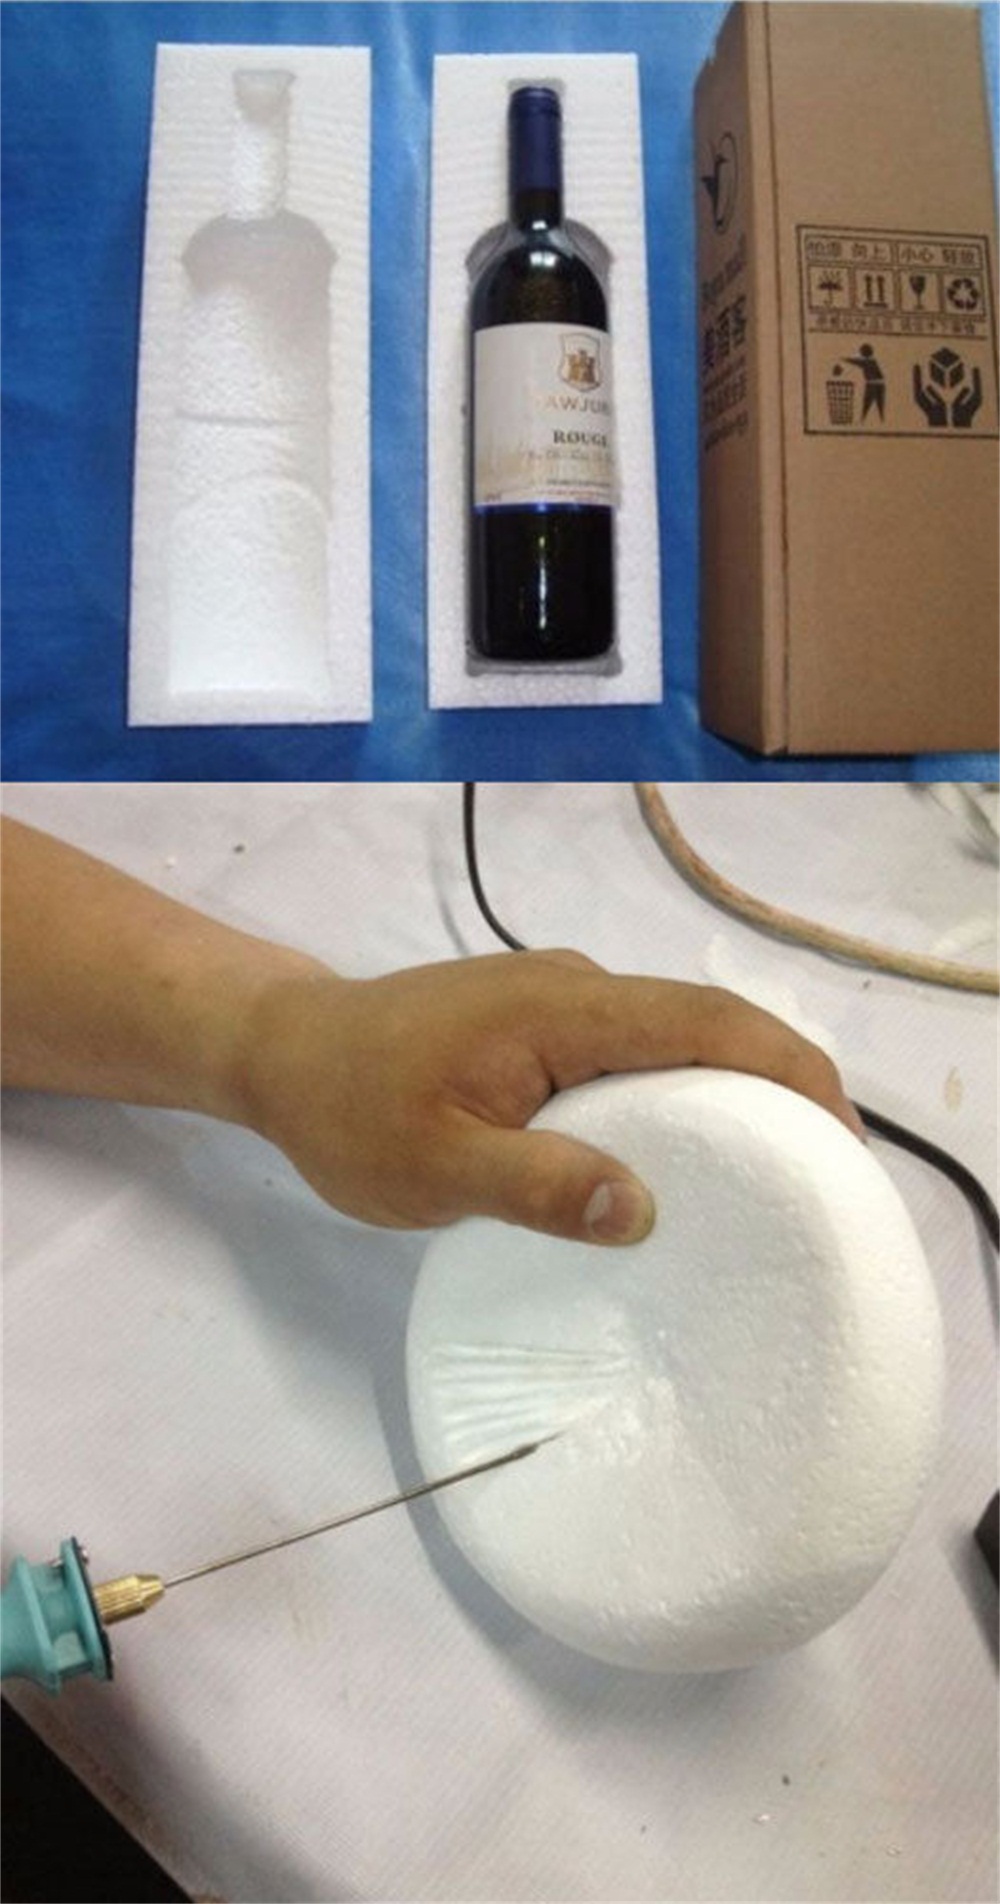 Electric Foam Cutter 10CM Cutting Pen And Electronic Adaptor Styrofoam Cut